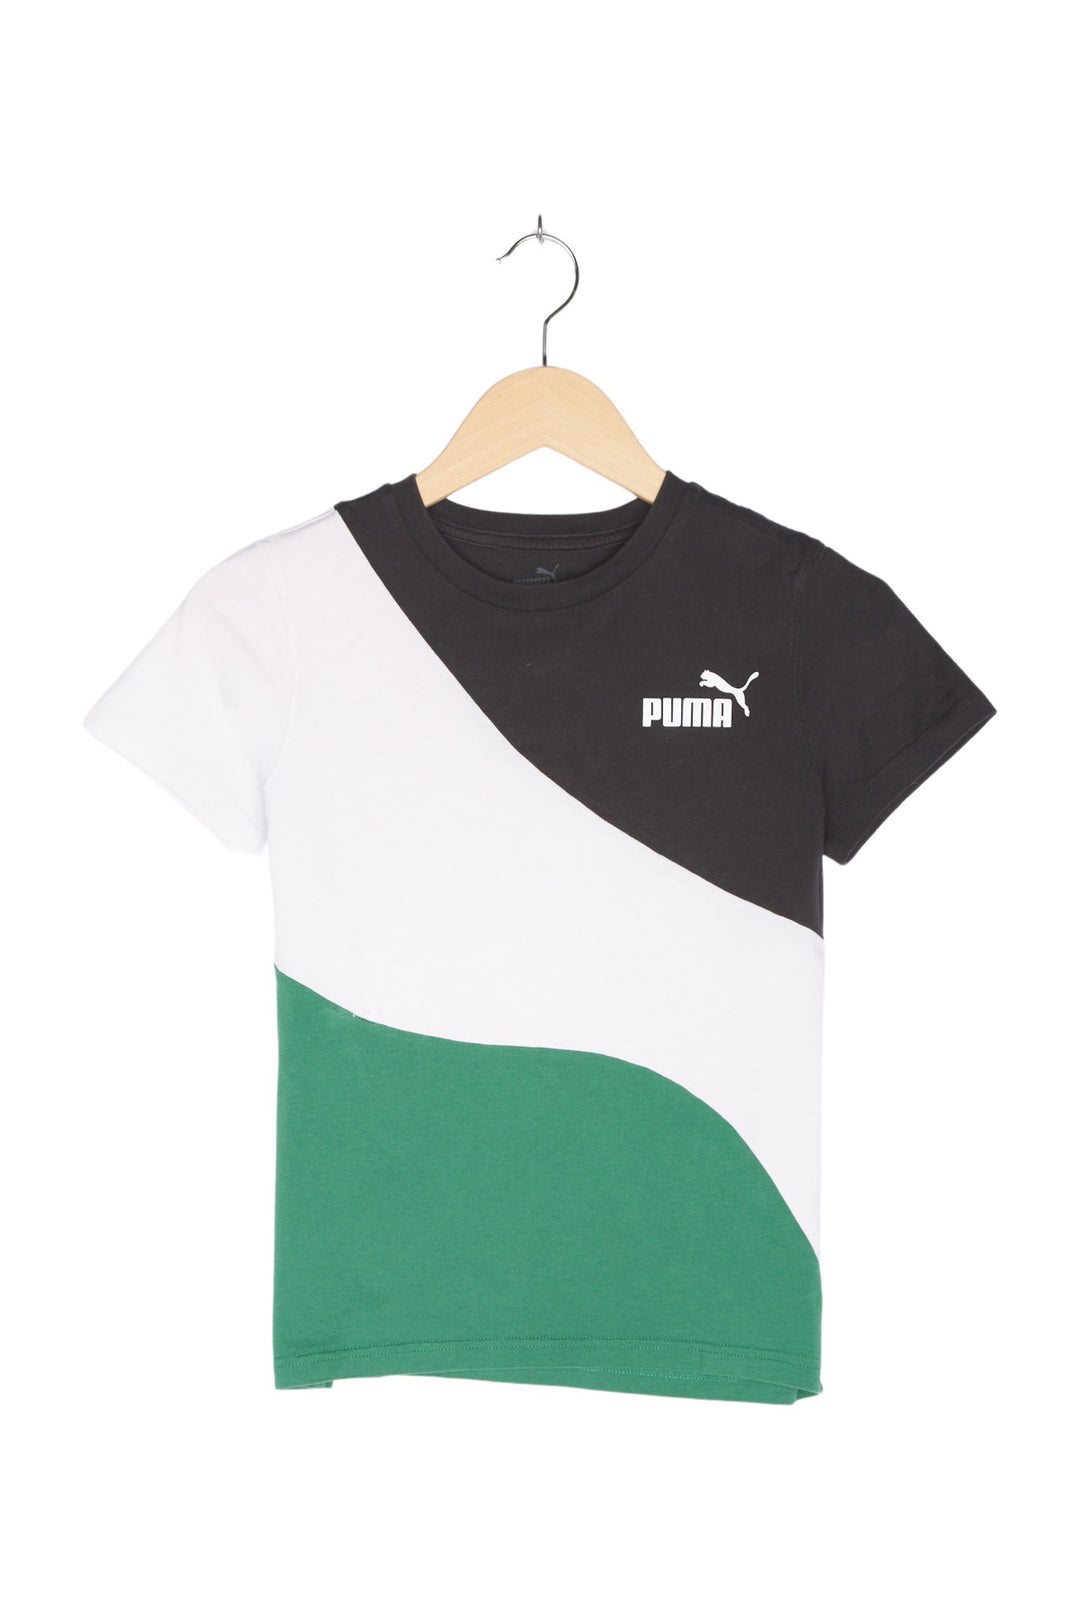 Puma T-Shirt für Kinder